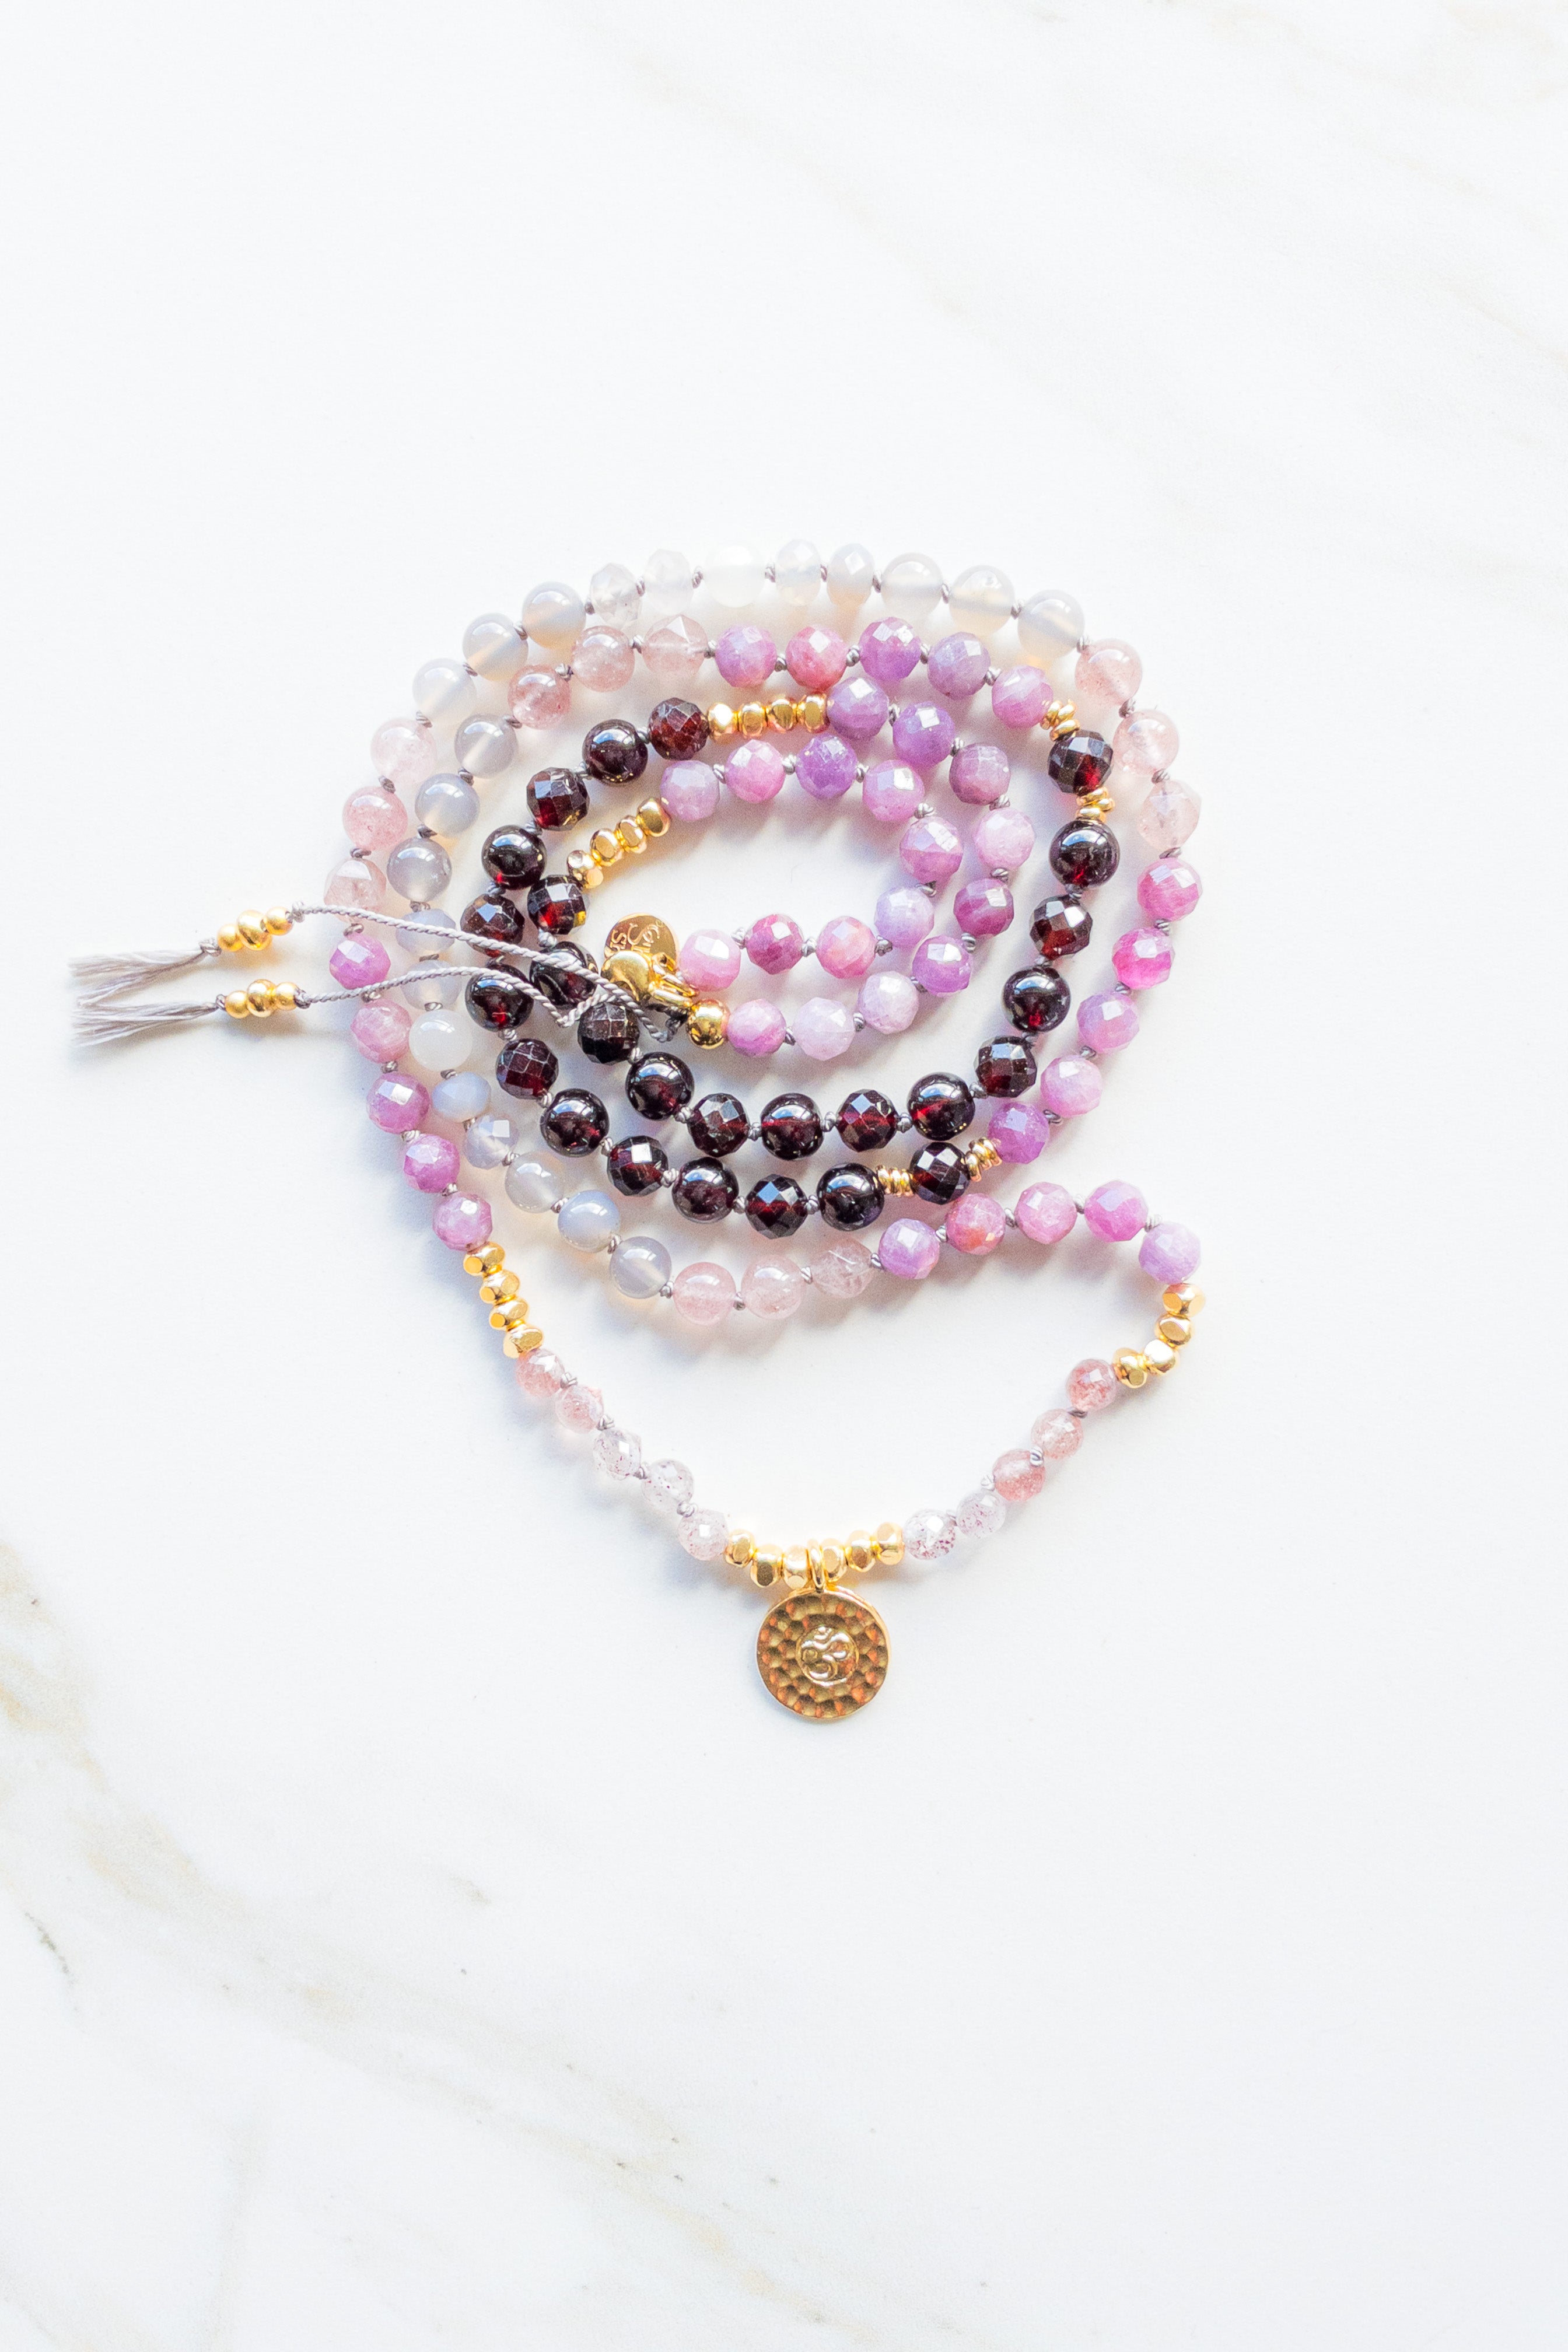 Ruby Sadhana Mala - OM- Indradhanush collection - ShaShã India inspired jewelry 